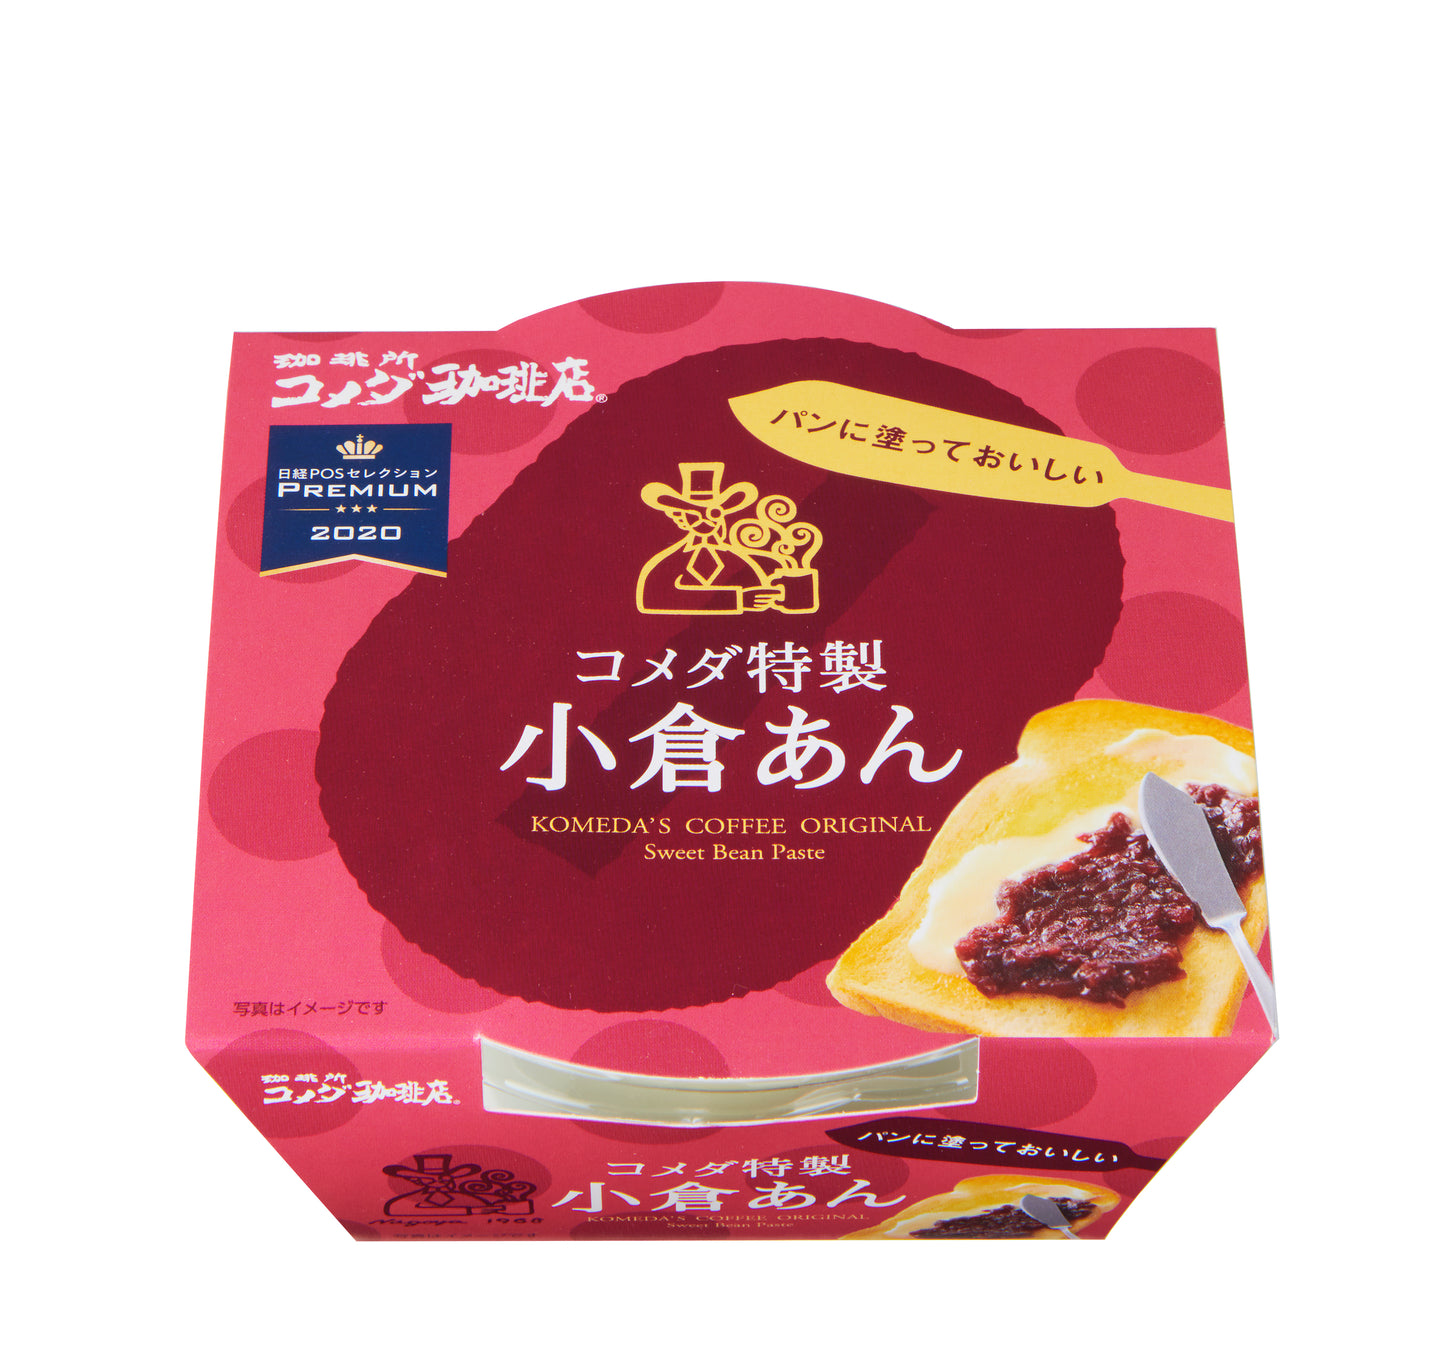 Endo Komeda's Coffee Original Ogura Red Bean Paste (300G)